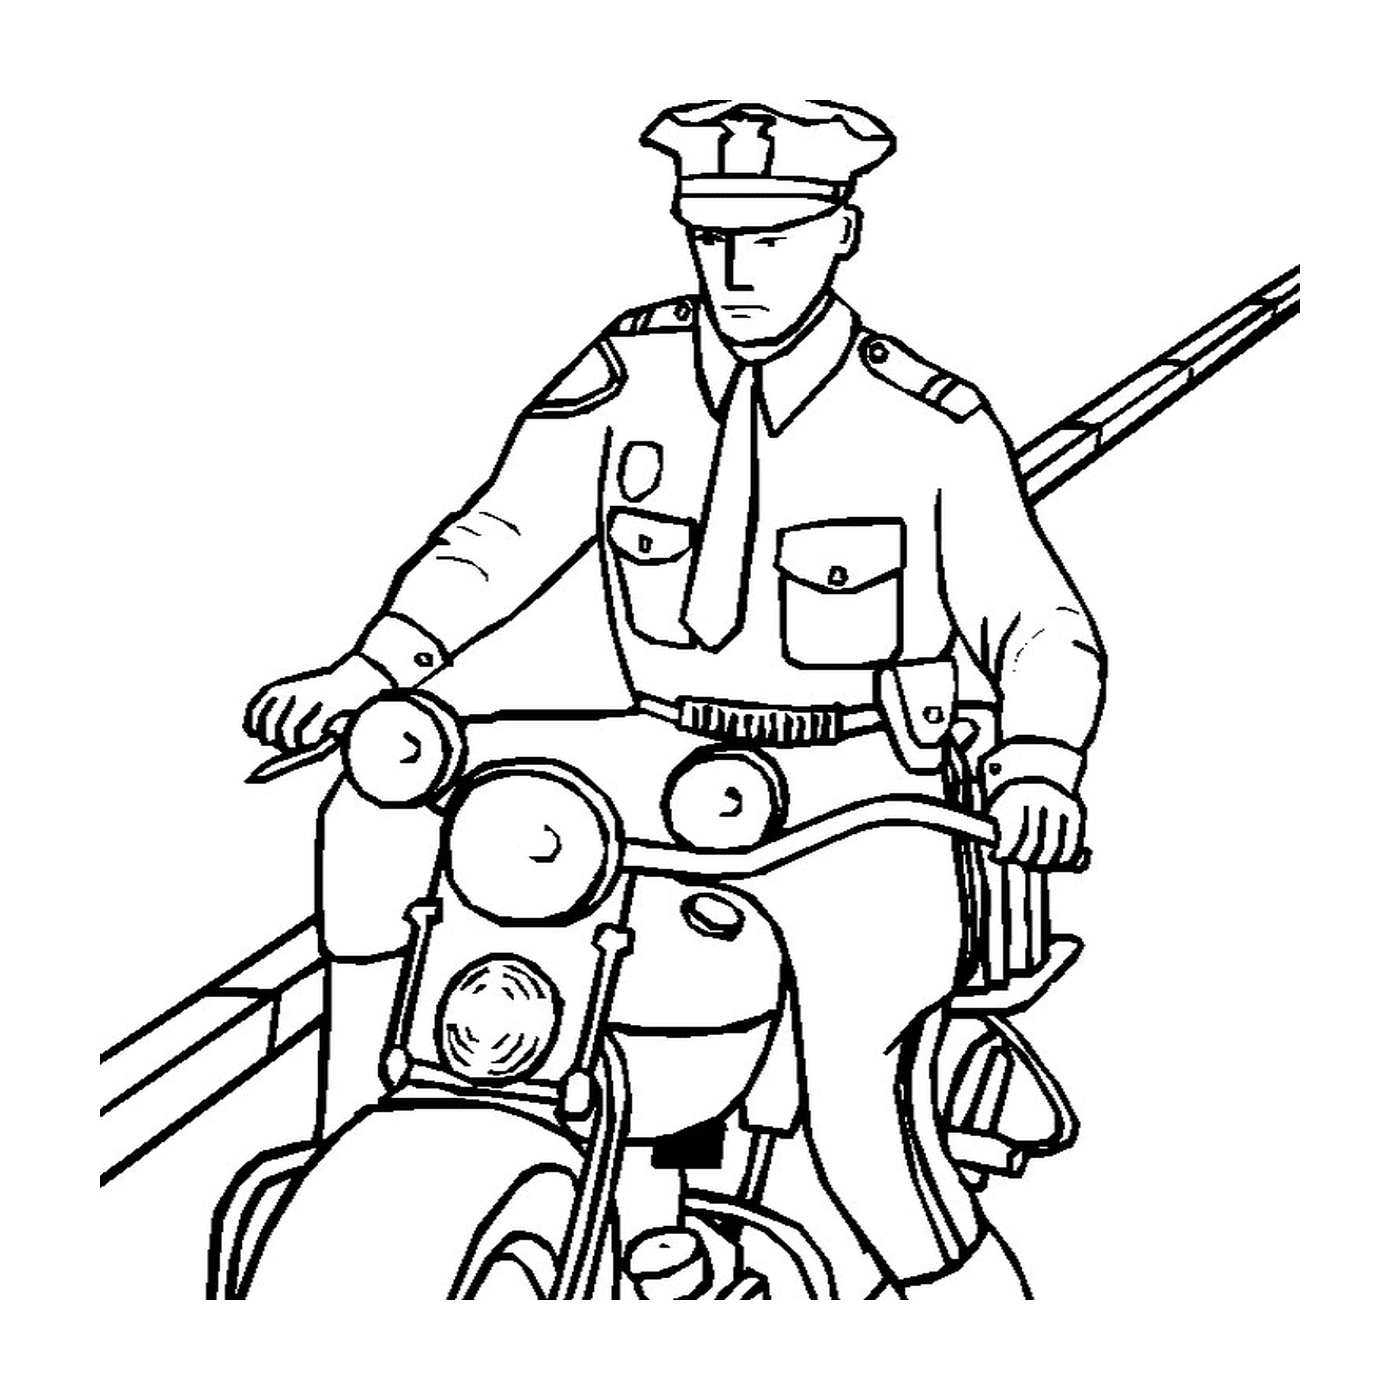  Motocicleta polícia rápida 